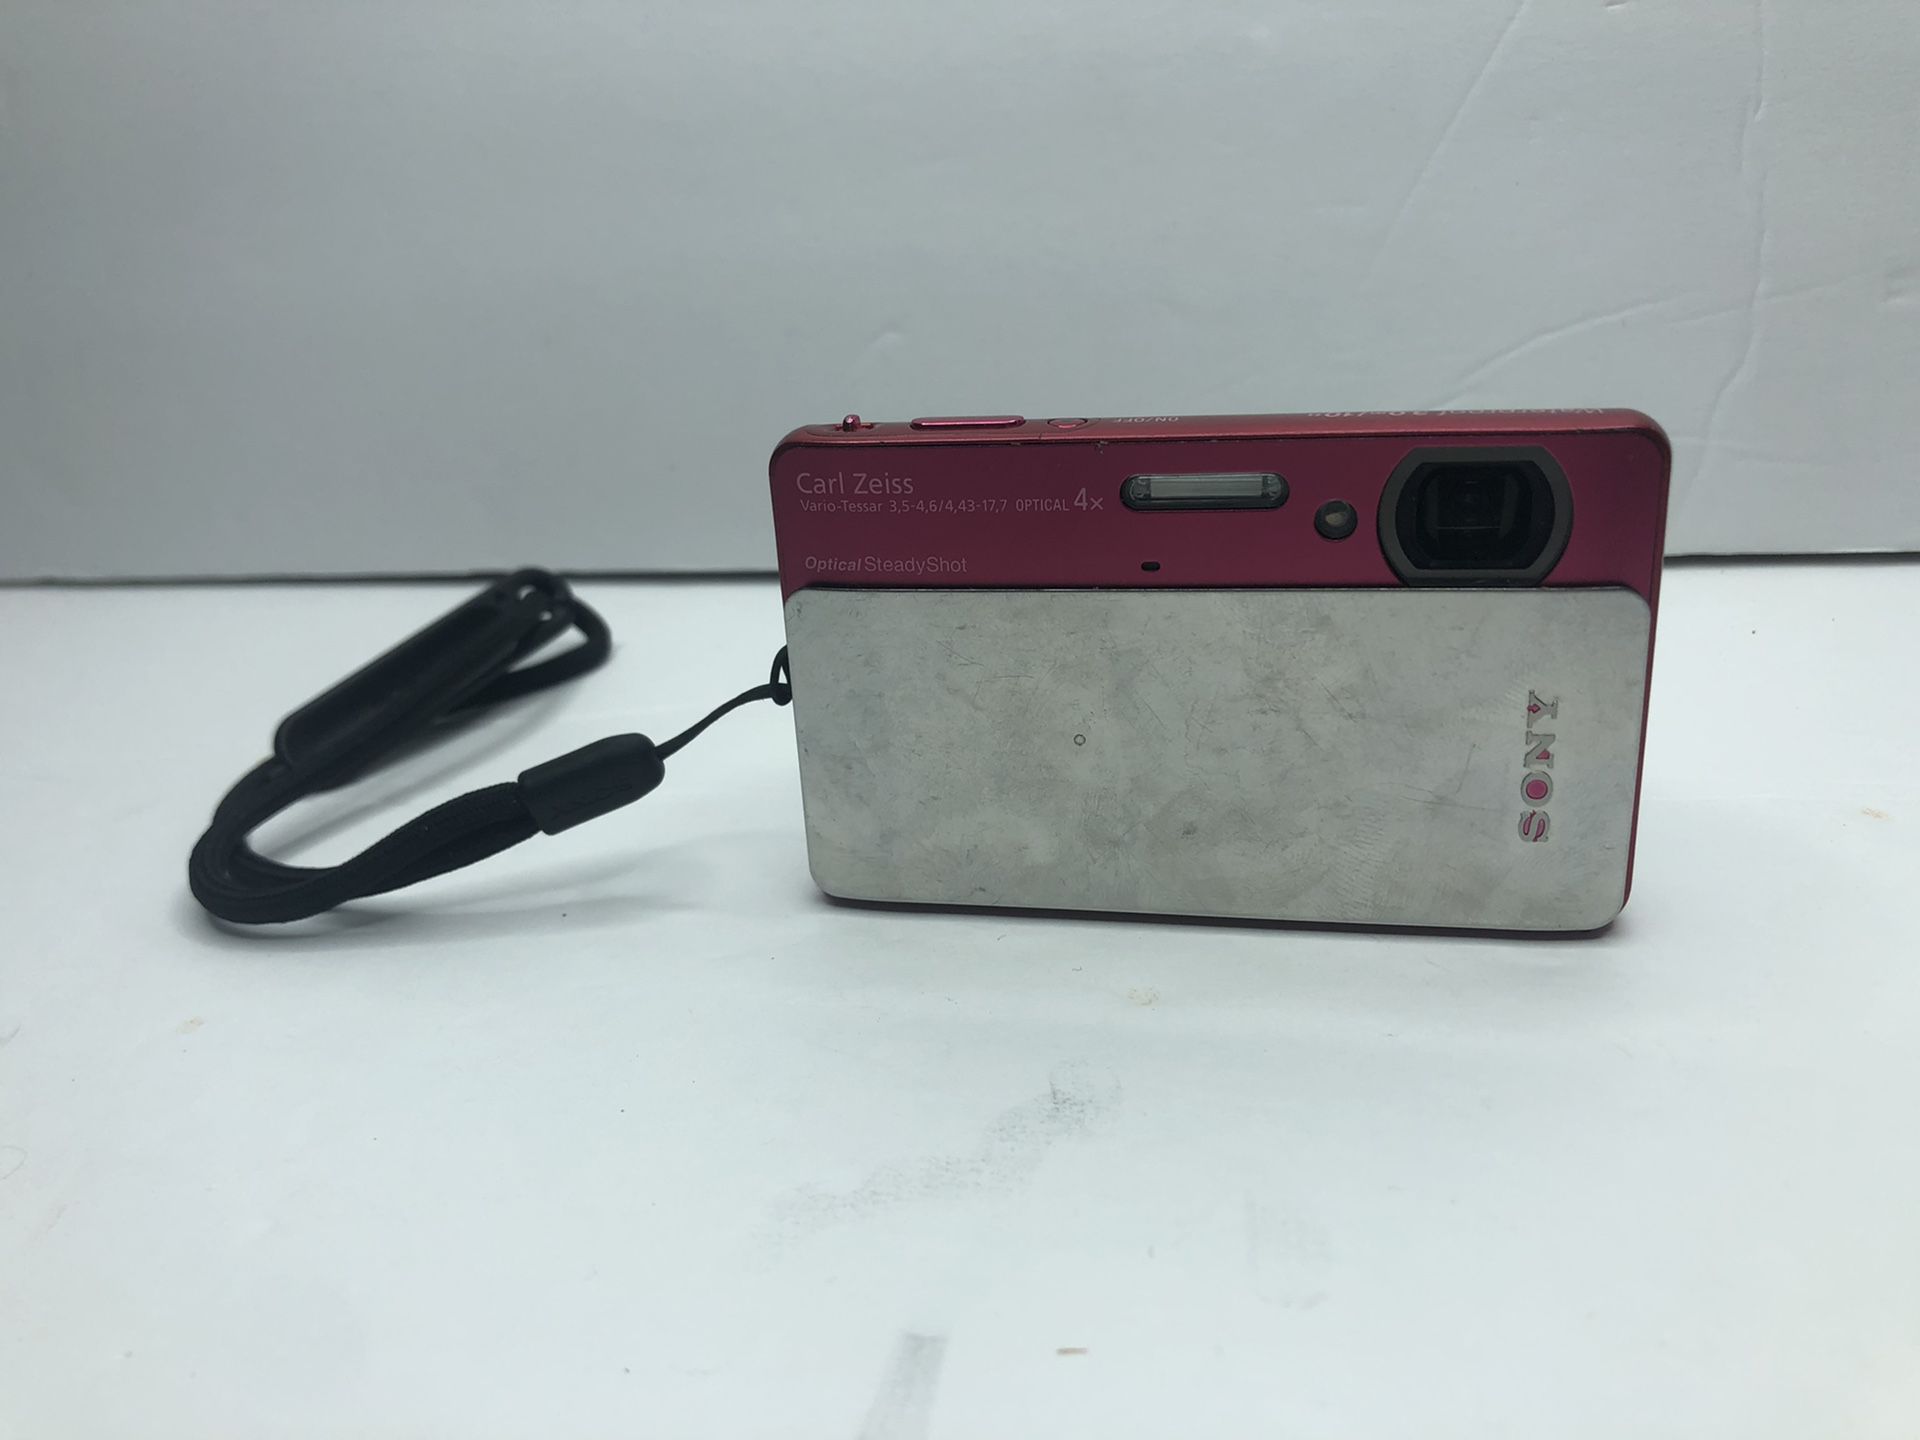 Sony DSC-TX5 Digital Camera.